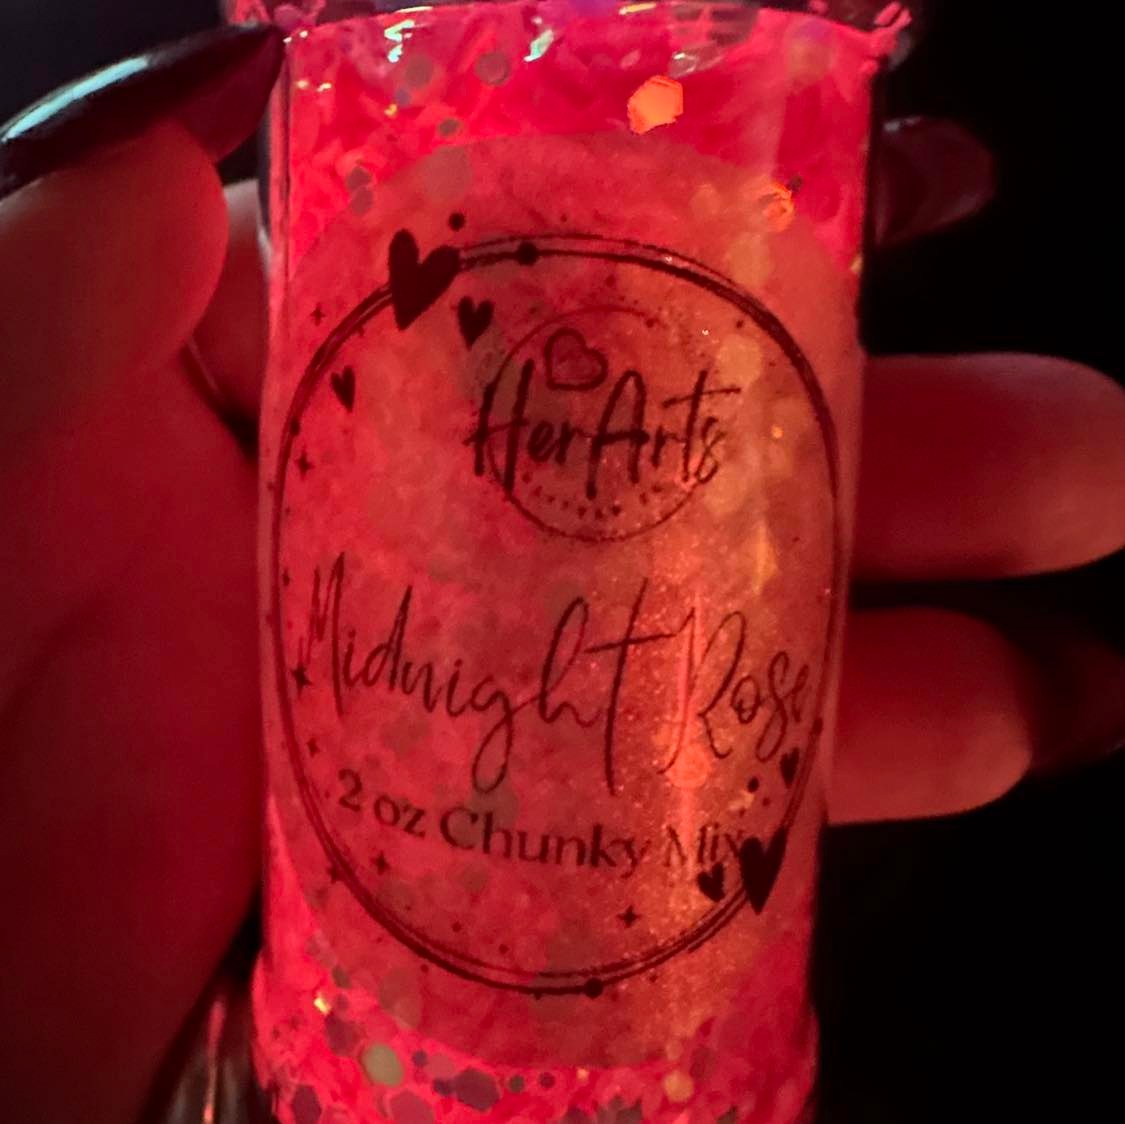 Midnight Rose Luminous Glow Chunky Mix Glitter